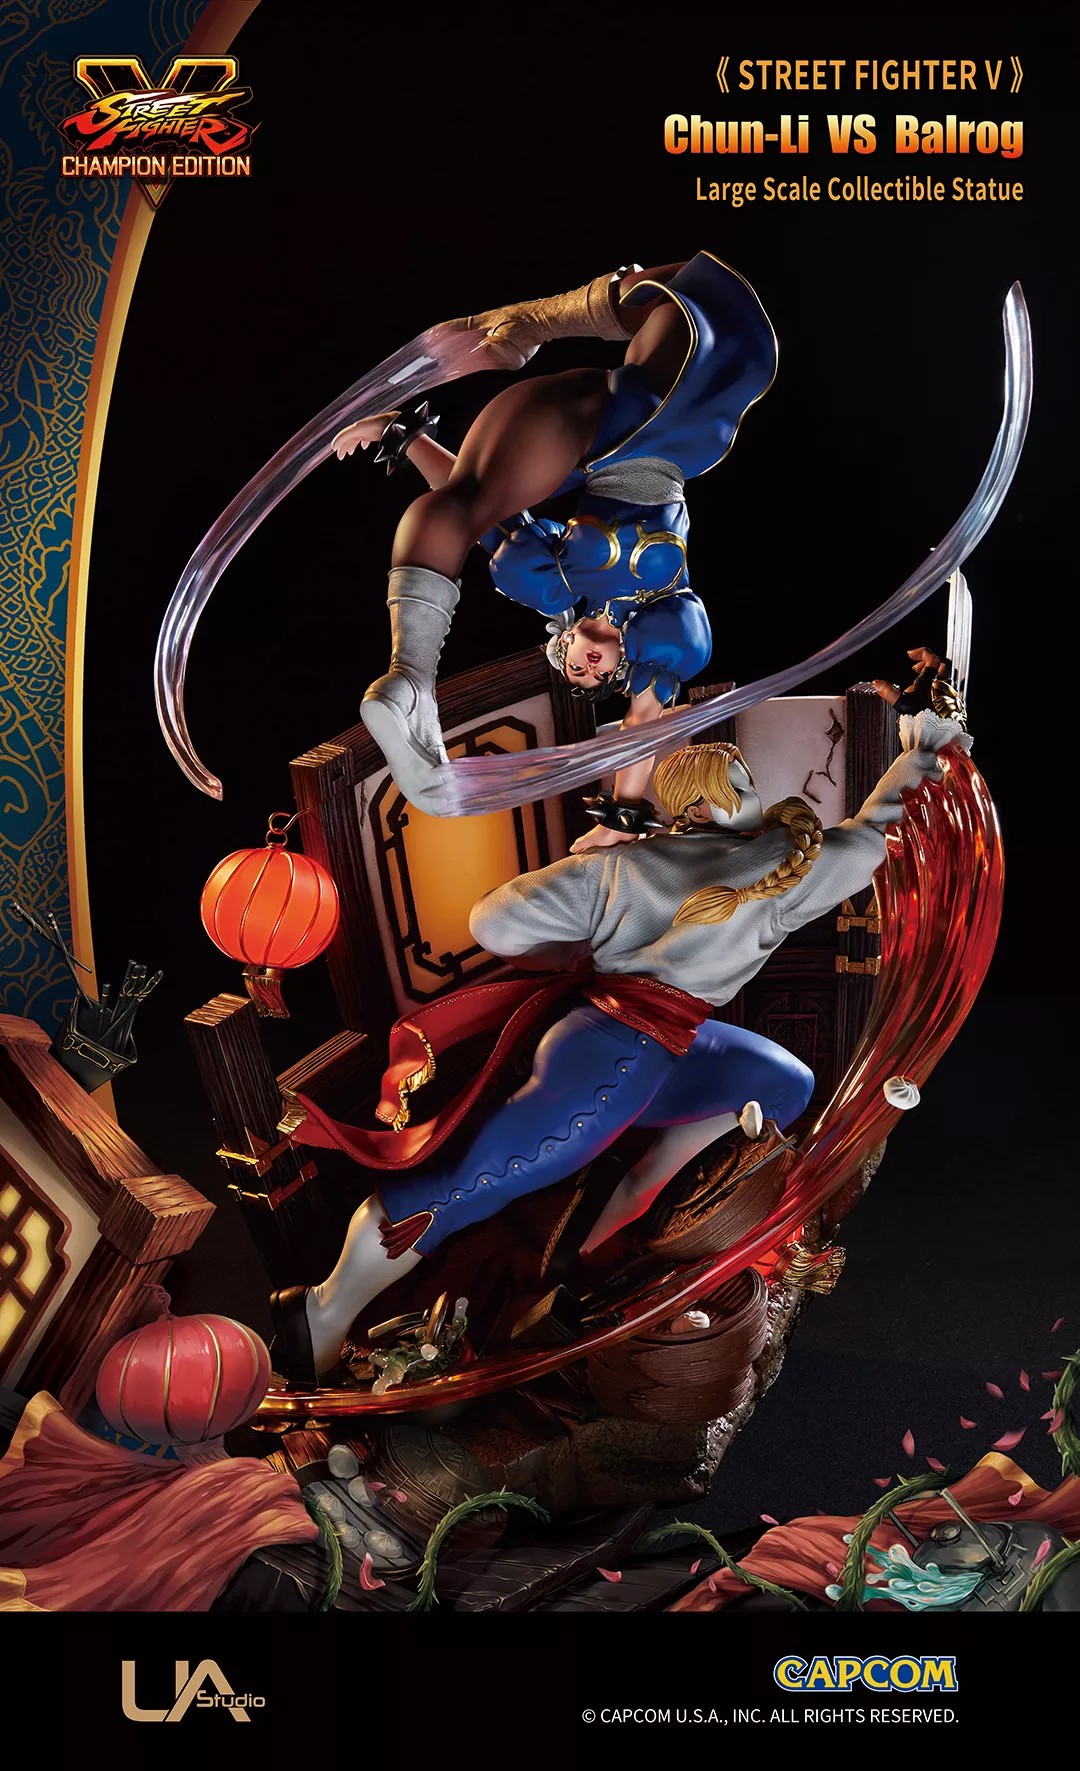 Unique Art "Street Fighter V" Authorized Statue Chun-Li VS Vega, 1/6 Scale Figures